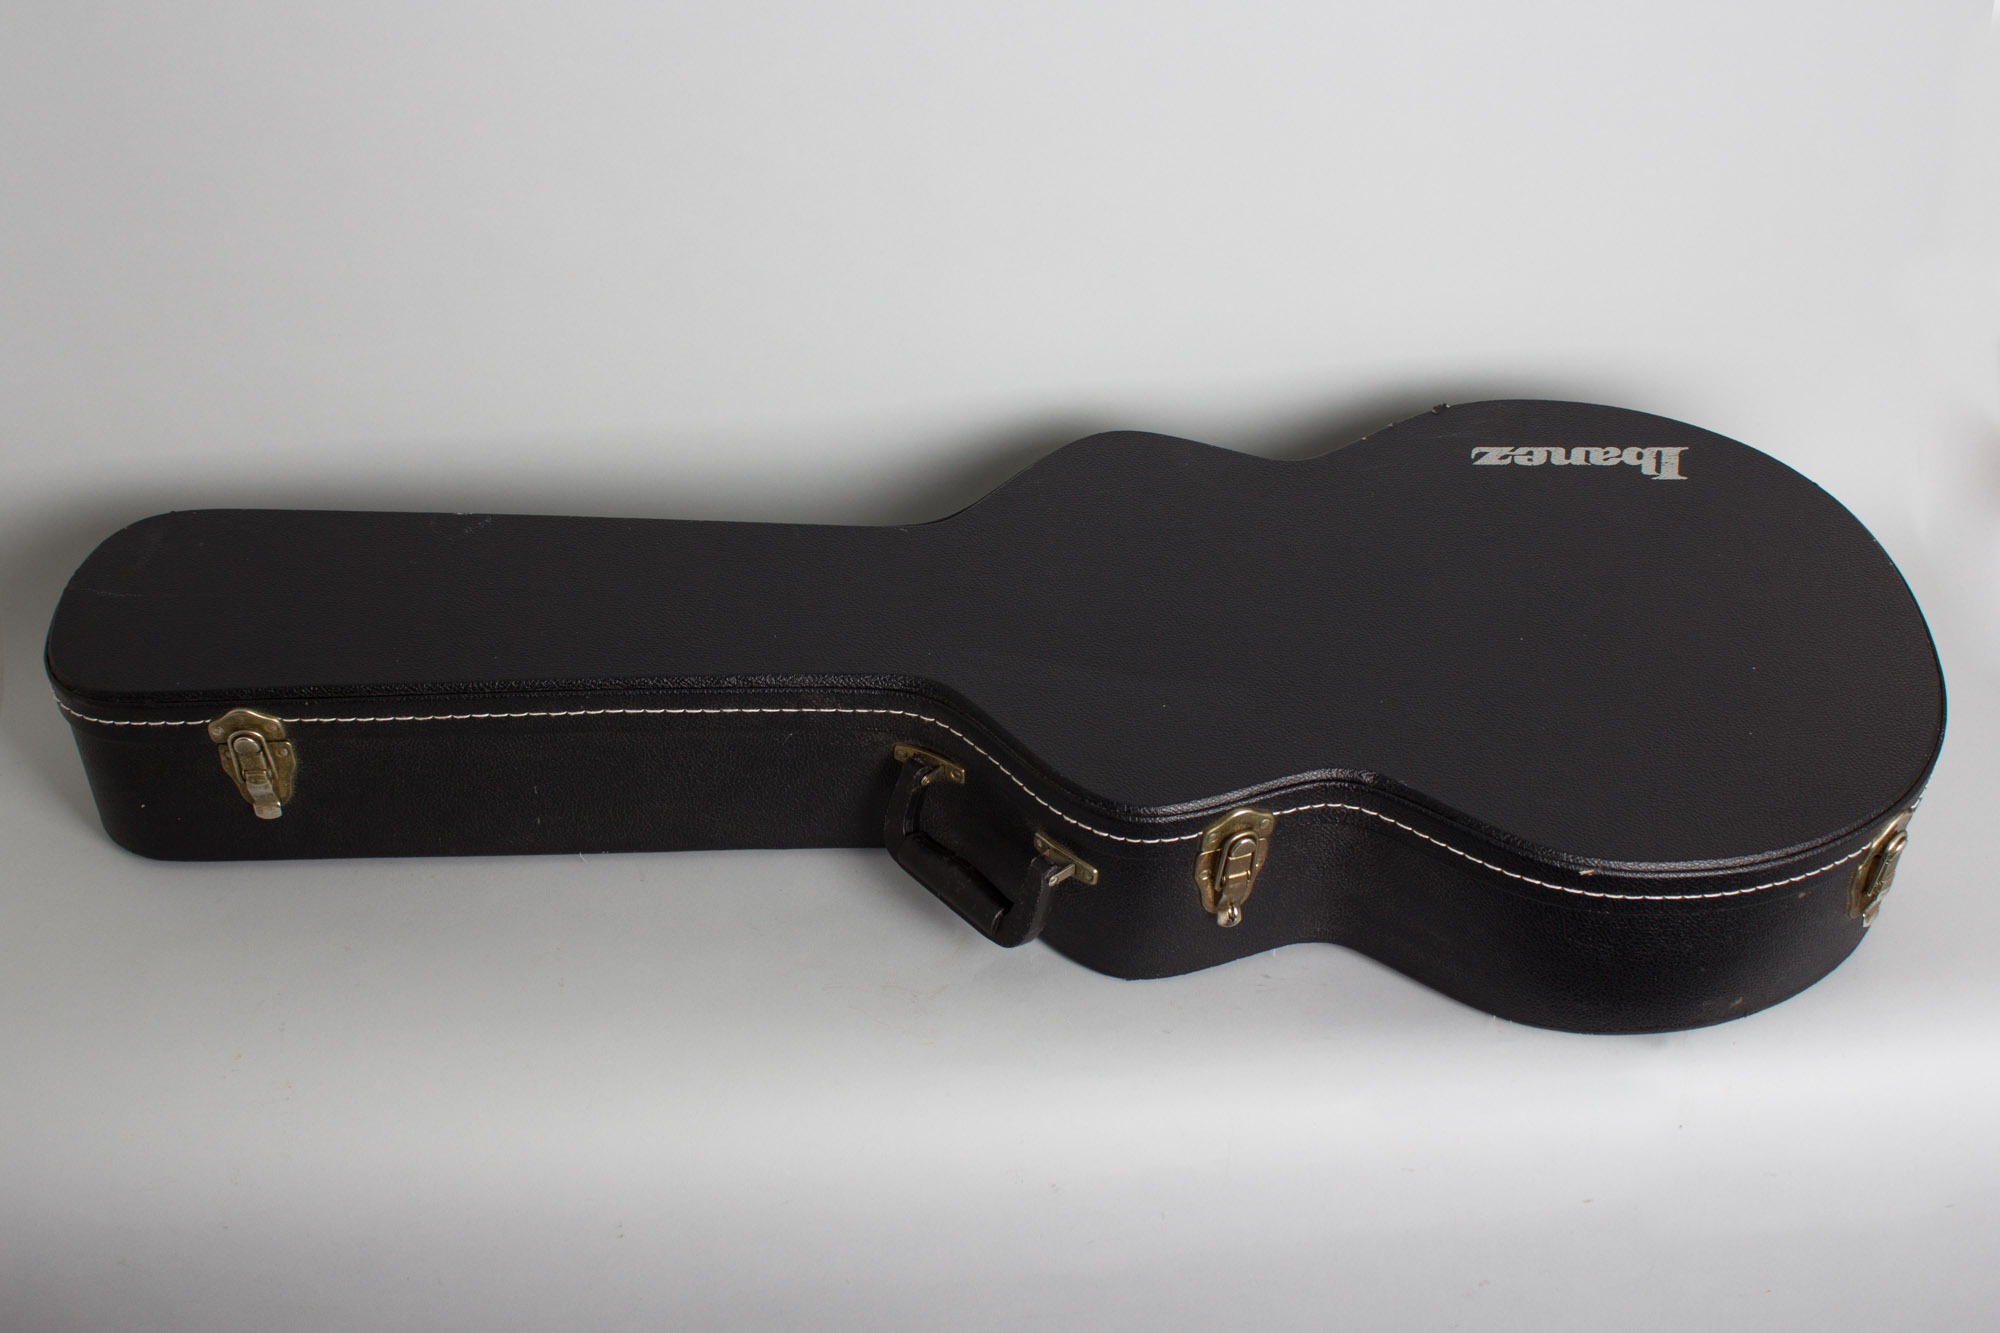 Fender Coronado II Antigua Thinline Hollow Body Electric Guitar